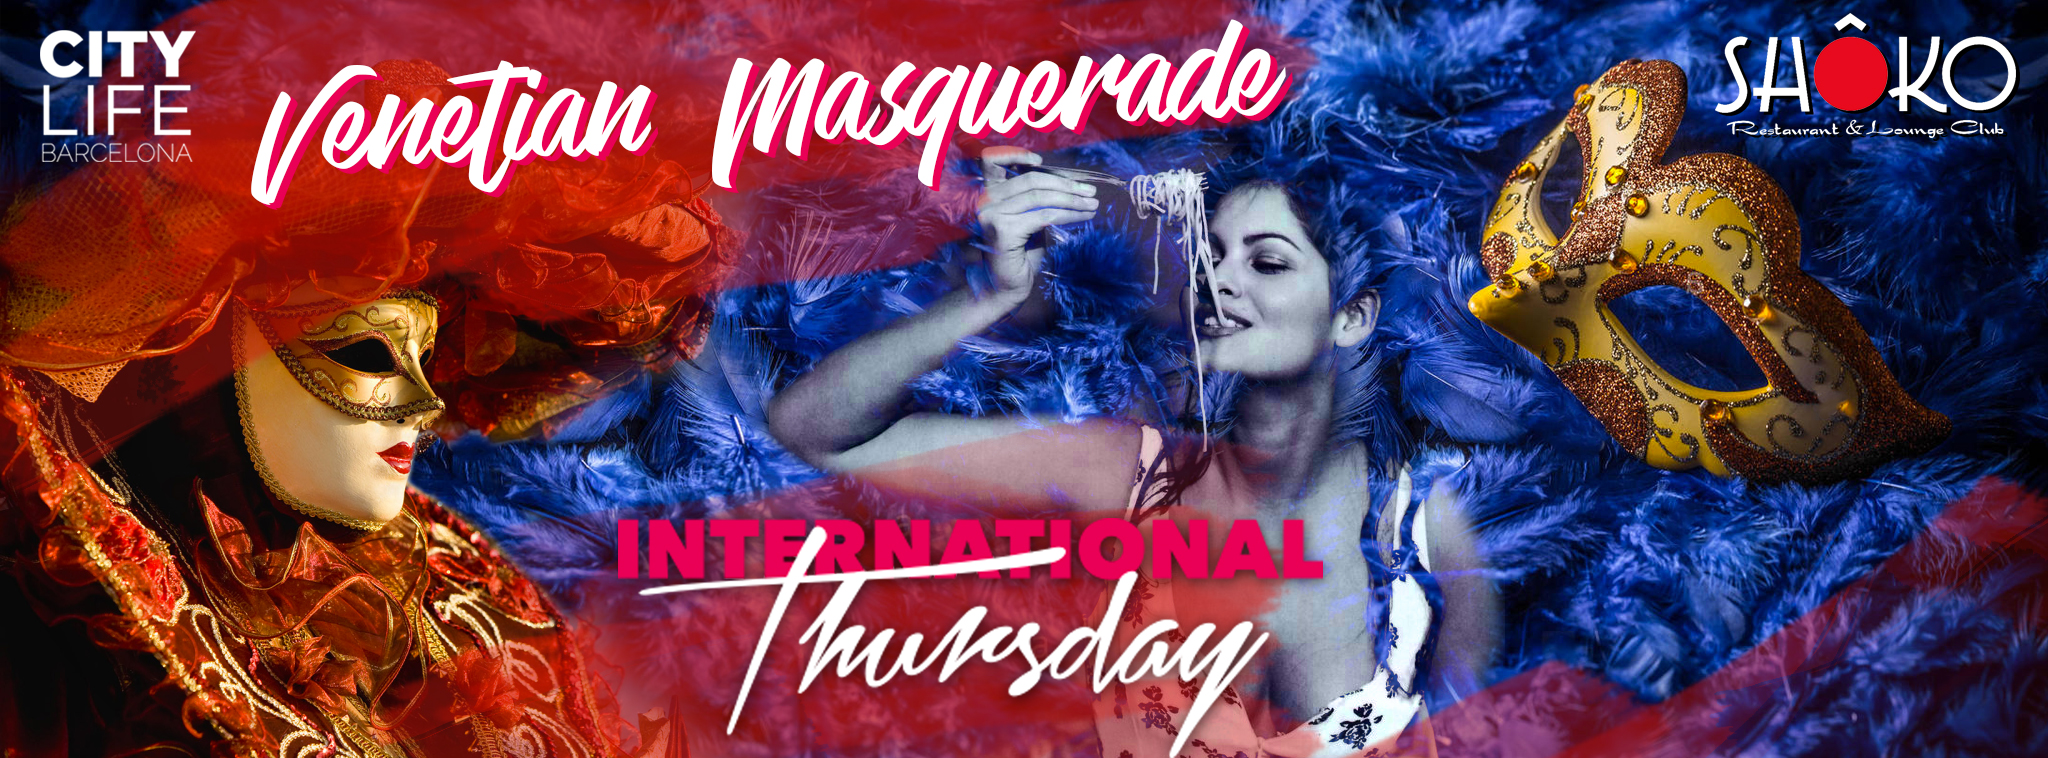 Venetian Masquerade – Free Dinner, 3 Free Drinks & Party! @Shoko Lounge Club!